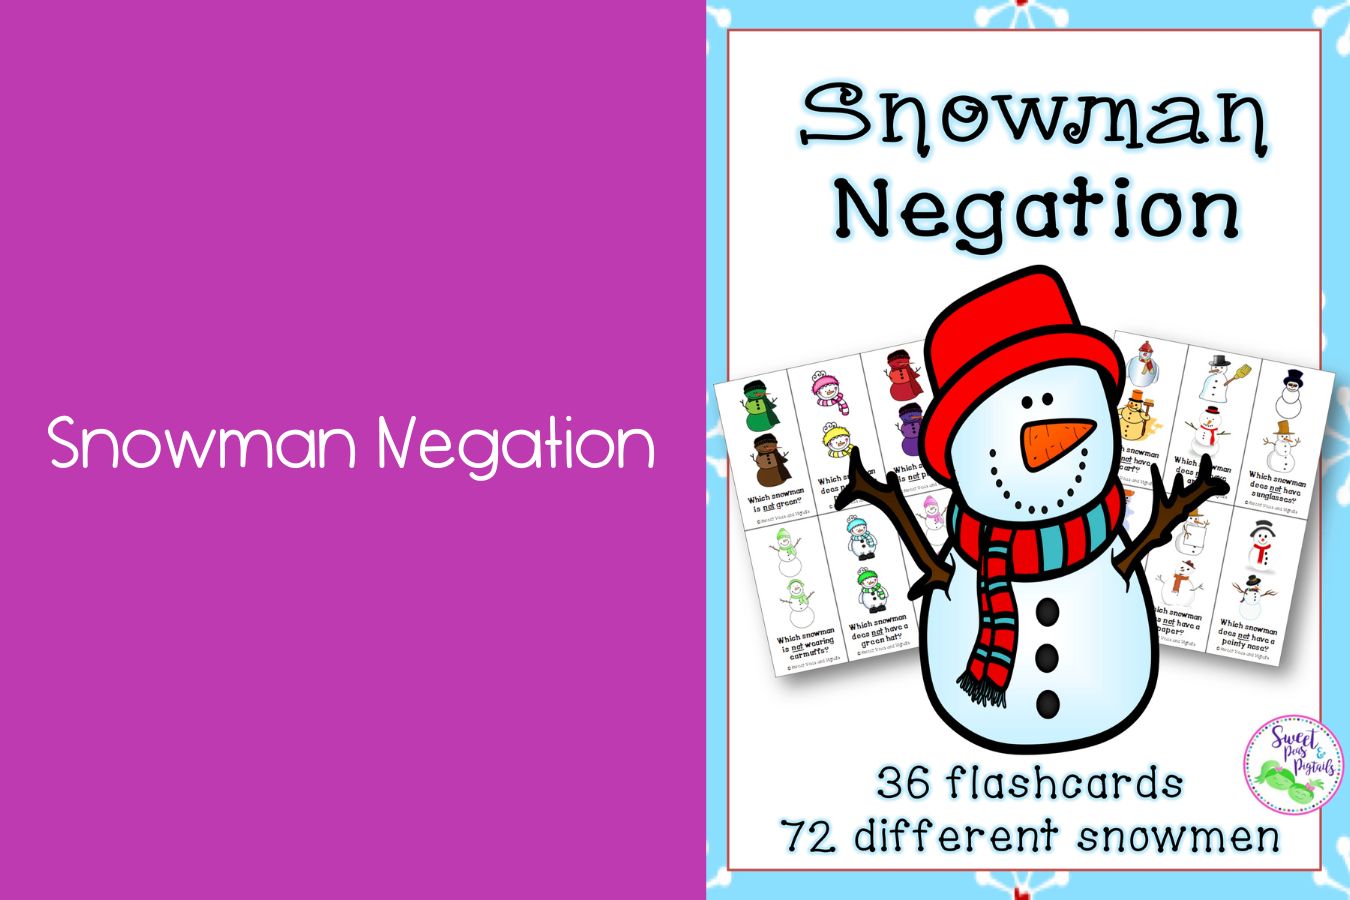 Snowman Negation Featured